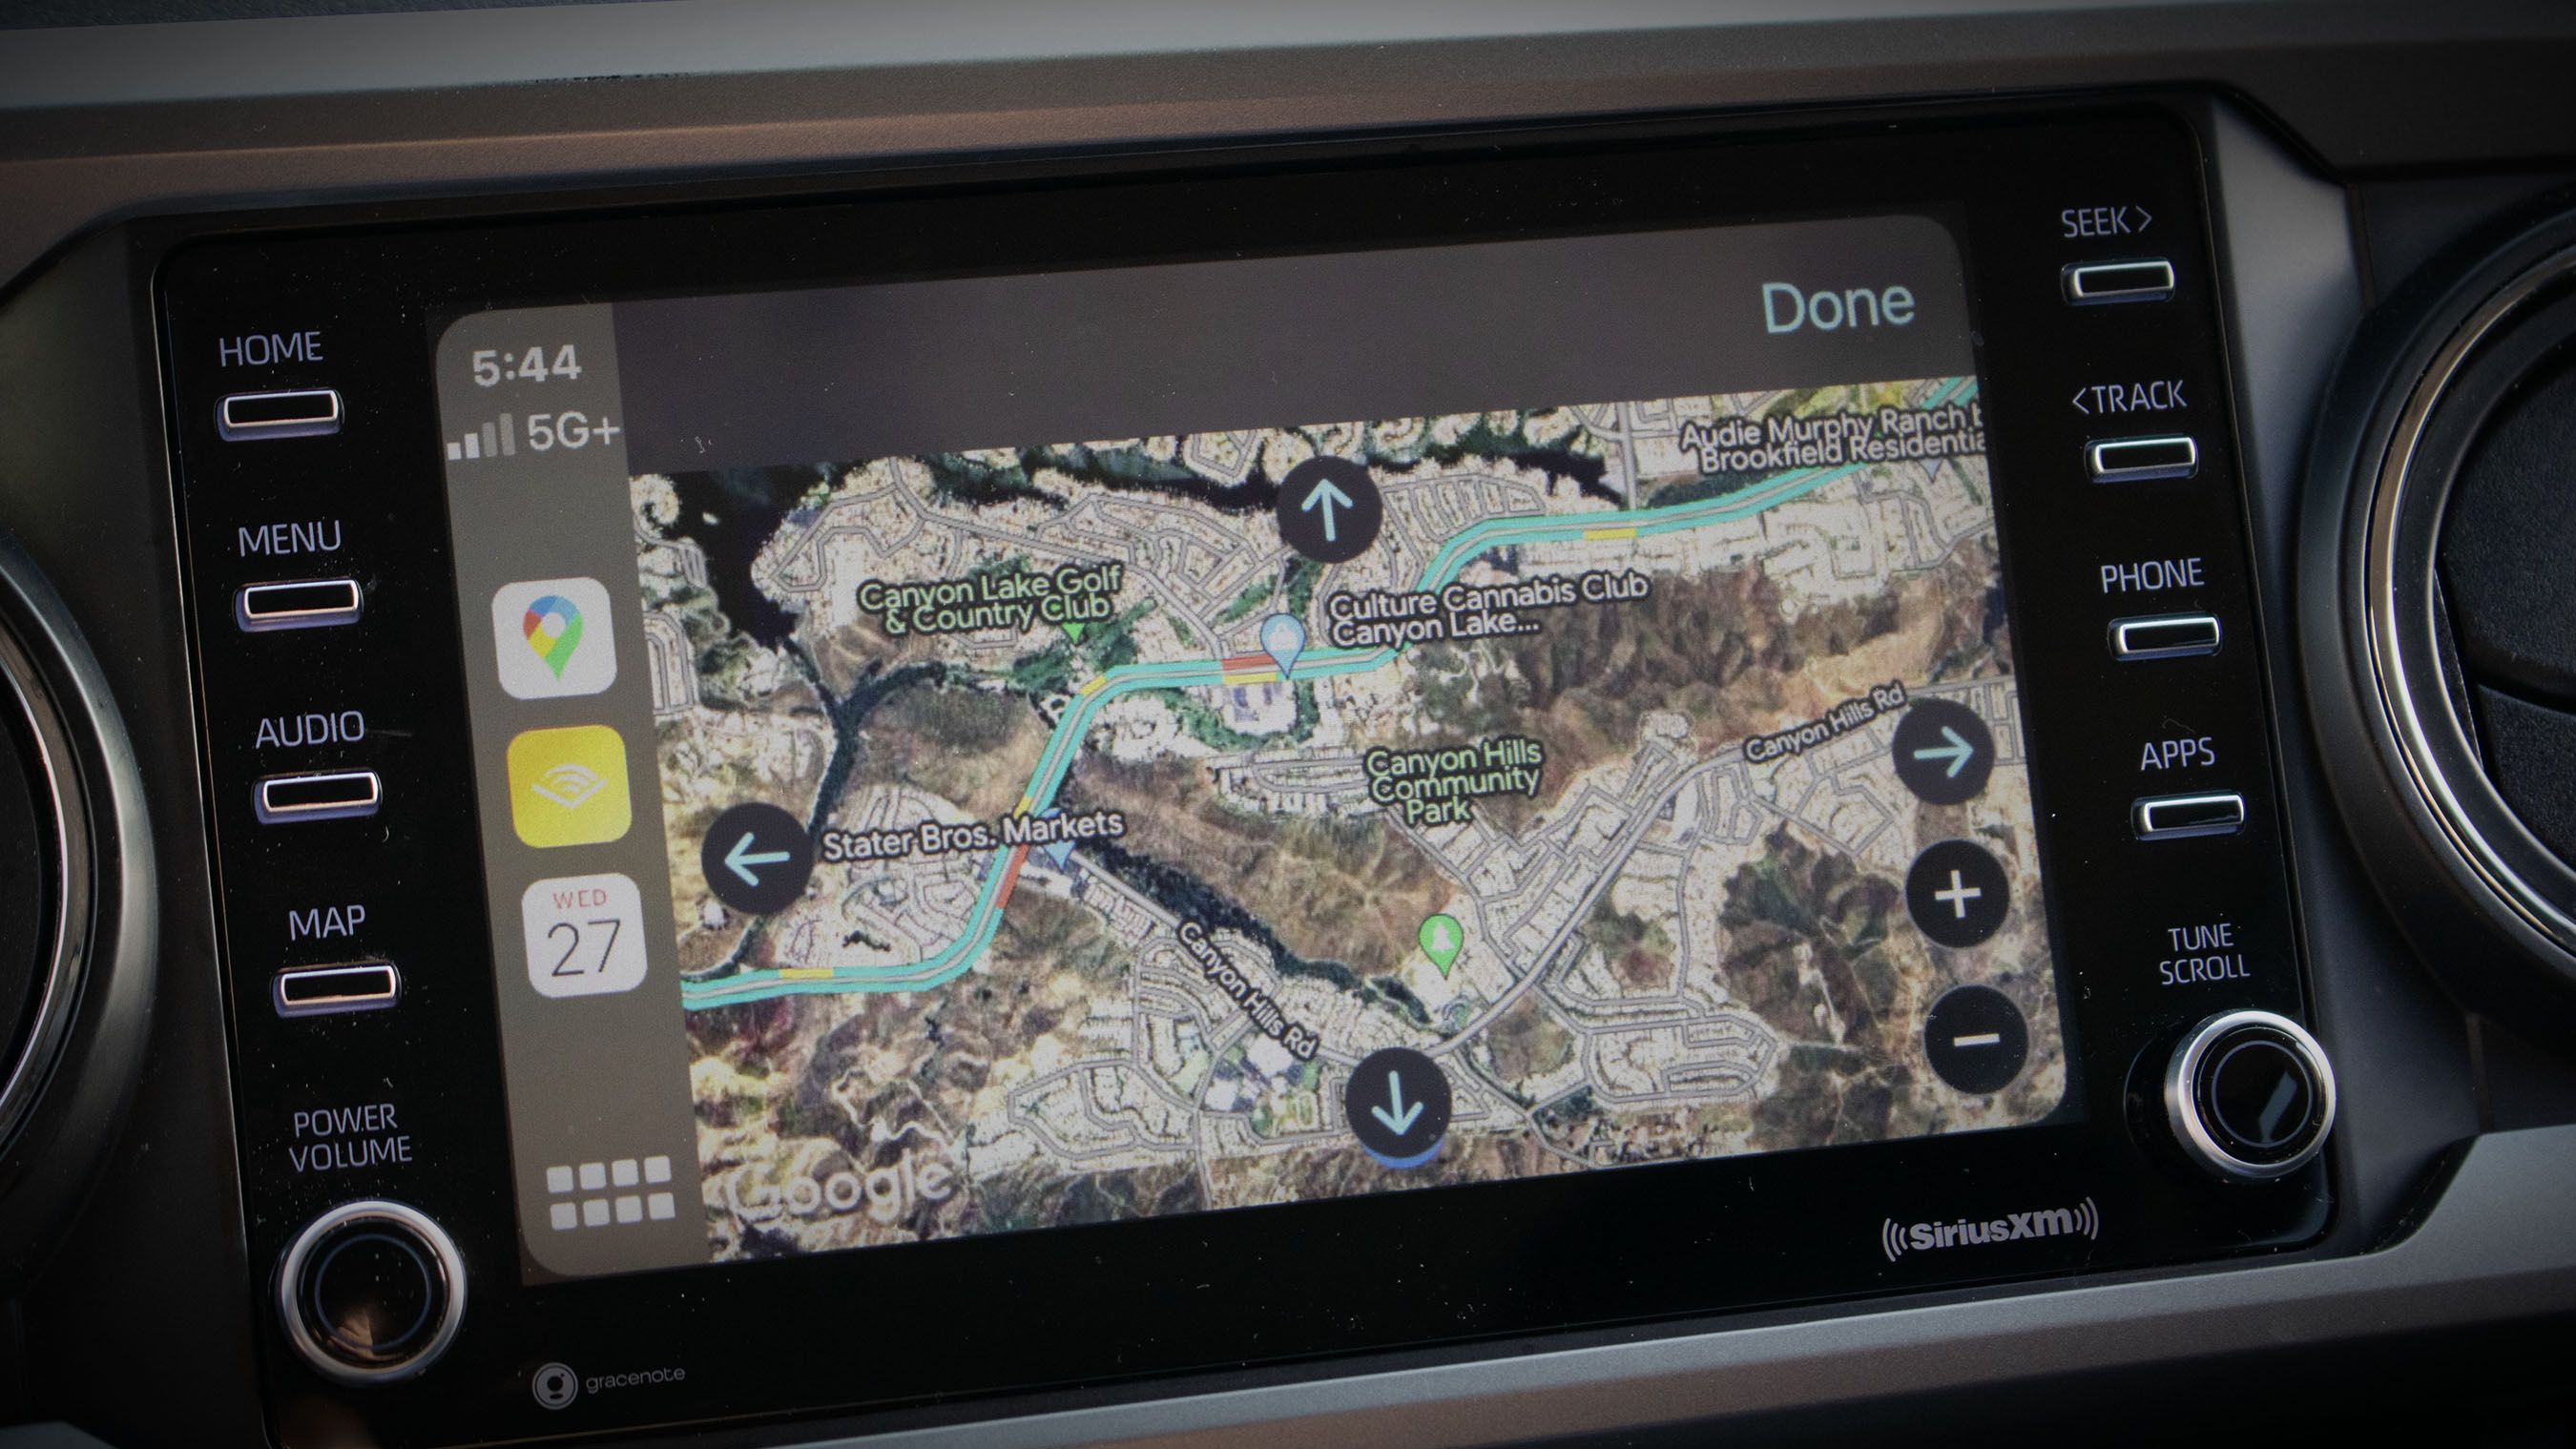 GoogleMaps displayed on Apple CarPlay